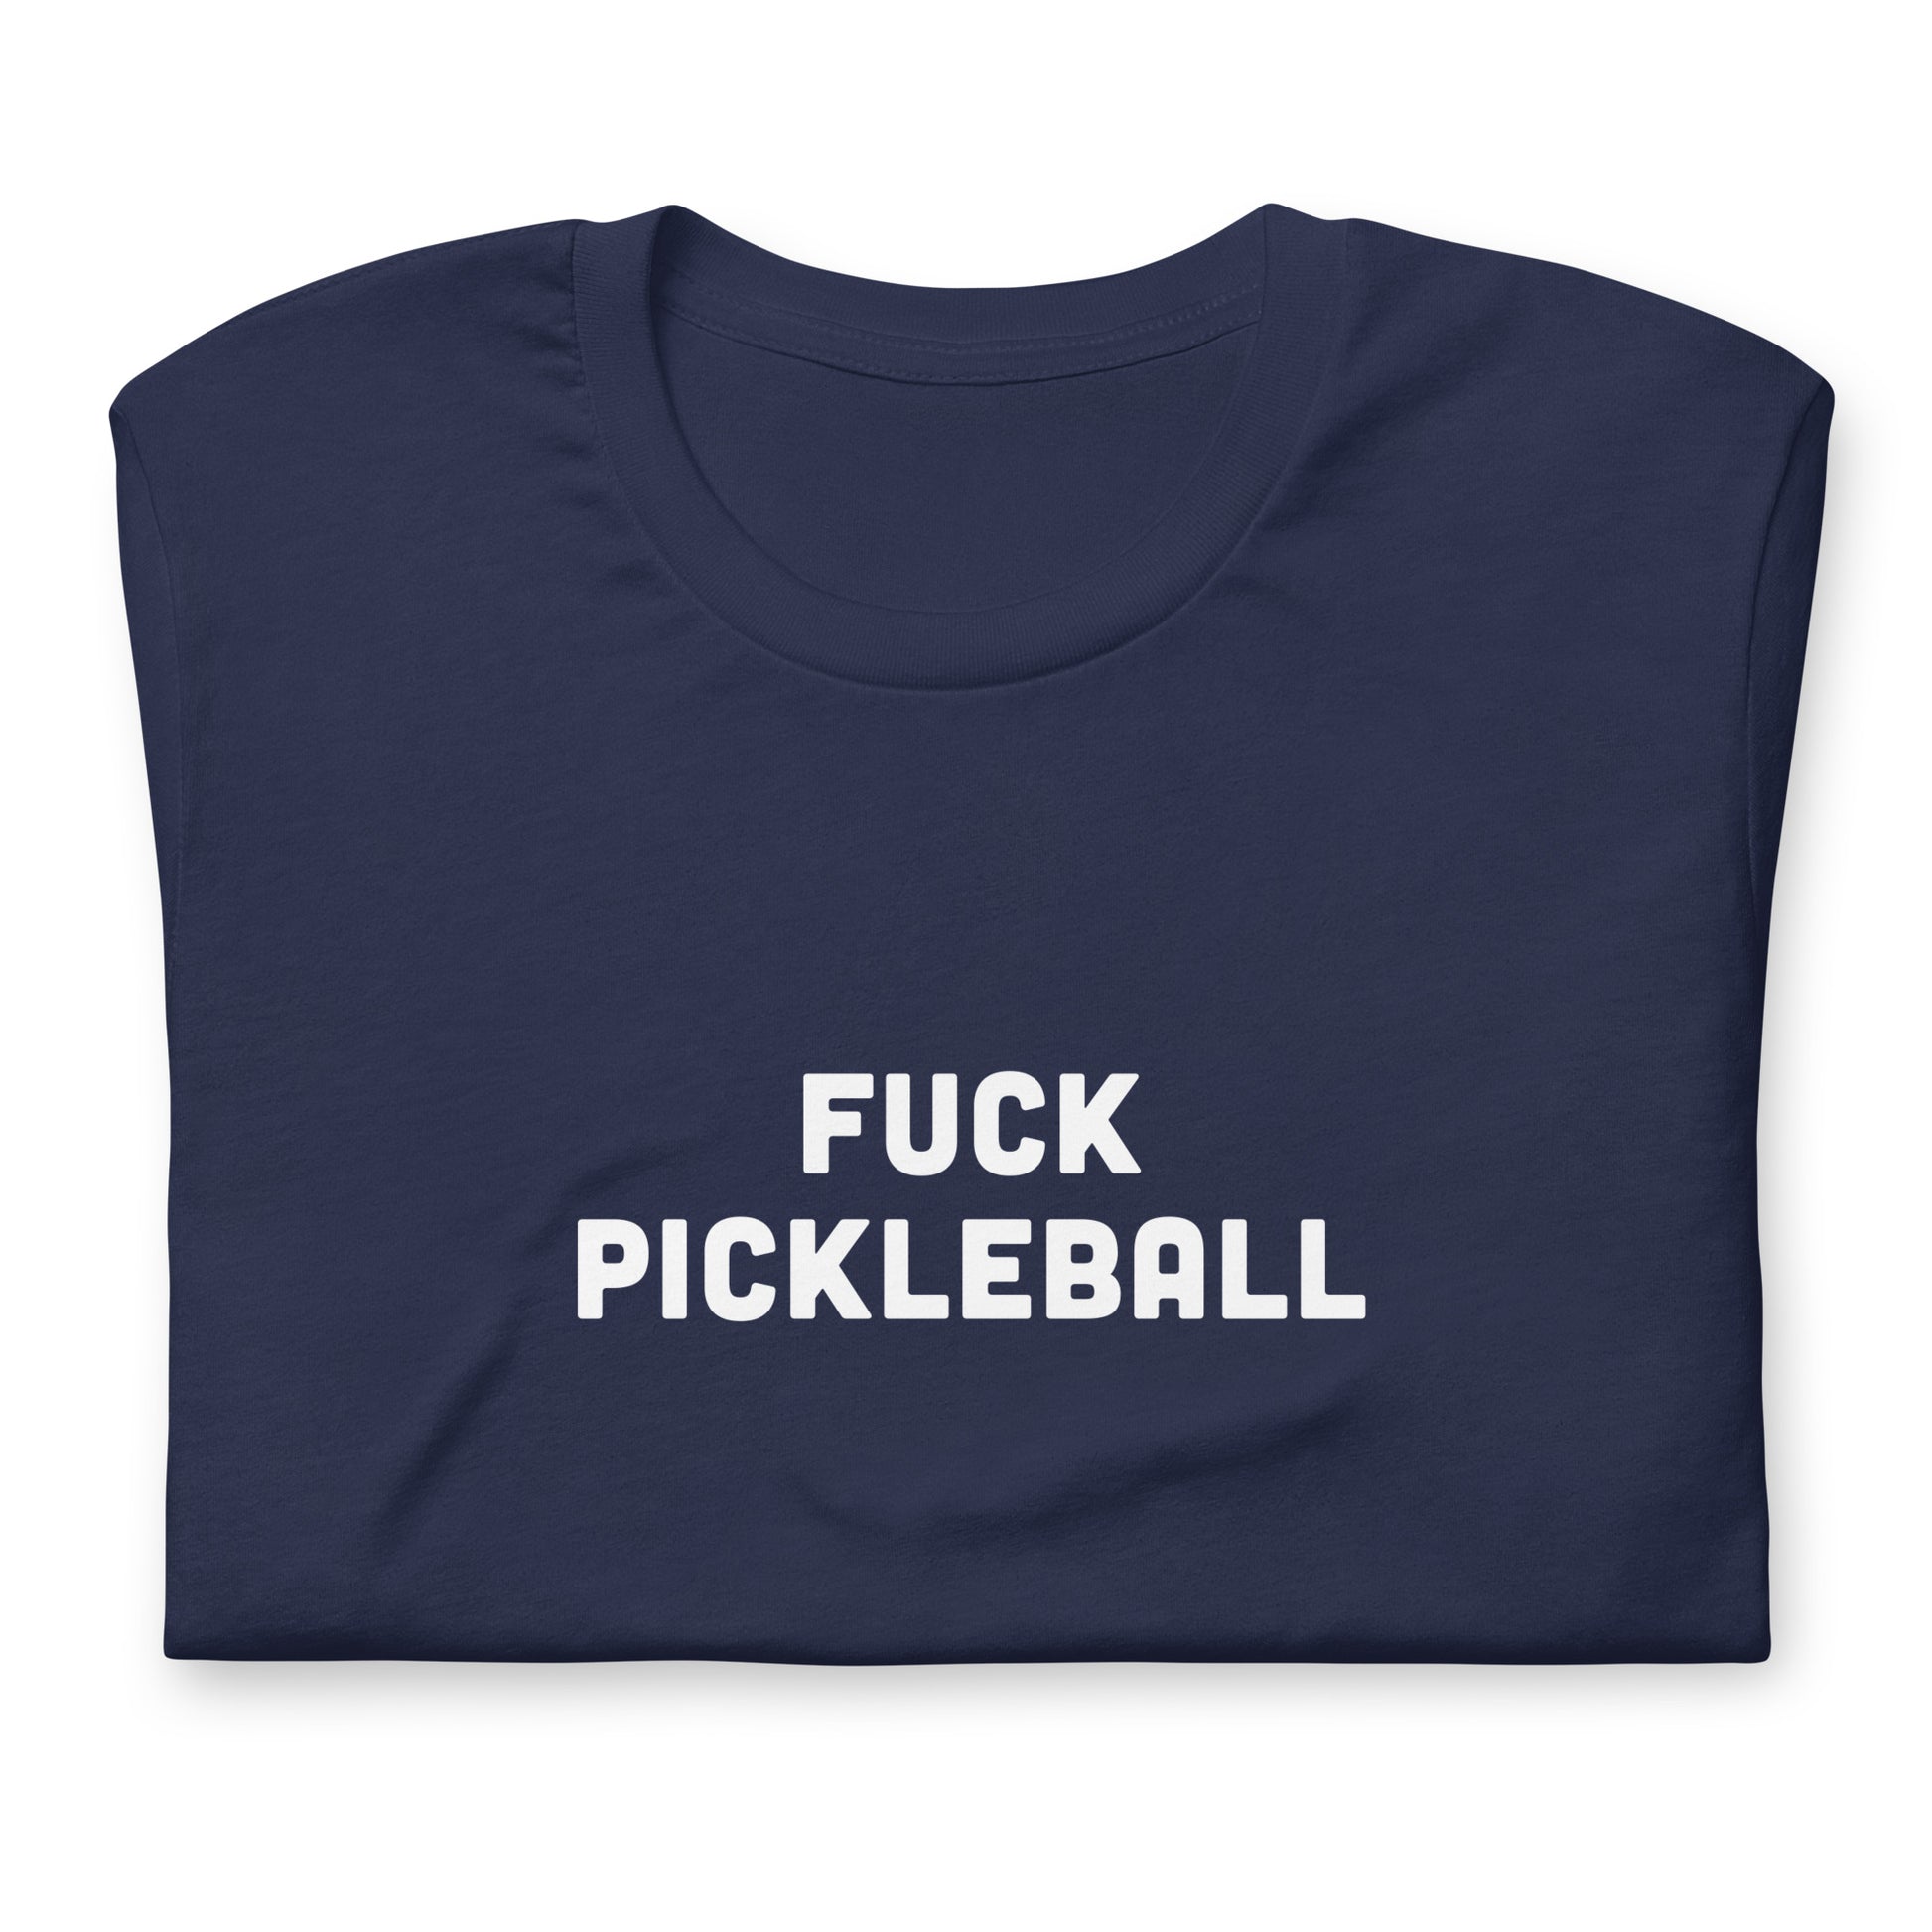 Fuck Pickleball T-Shirt Size S Color Black